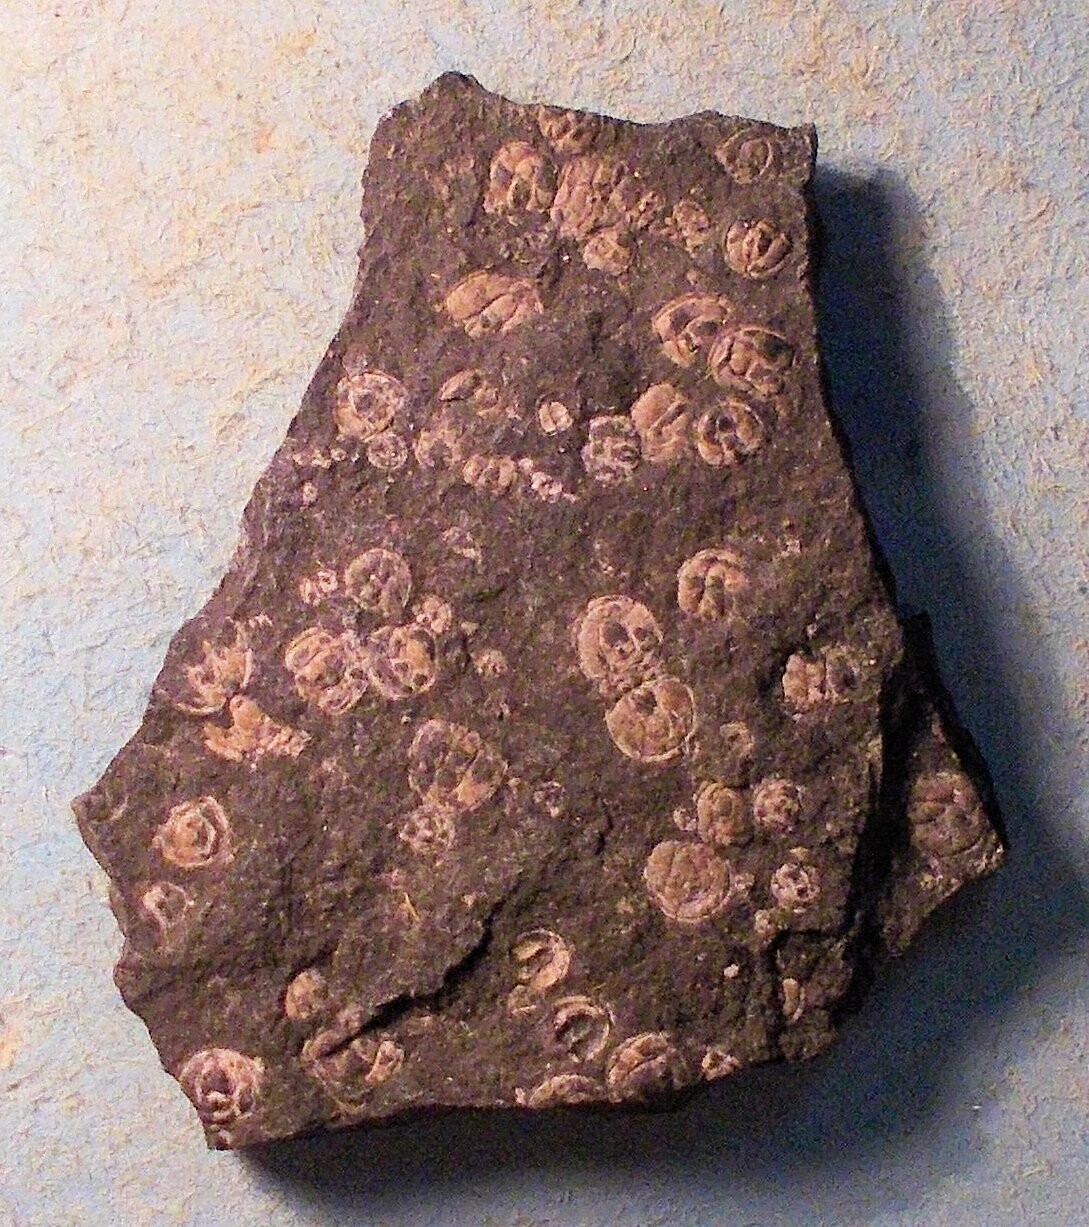 Rare and fine 0.8cm complete Triplagnostus (Triplagnostus) gibbus multiple; Middle Cambrian, Brantavek, Sweden.